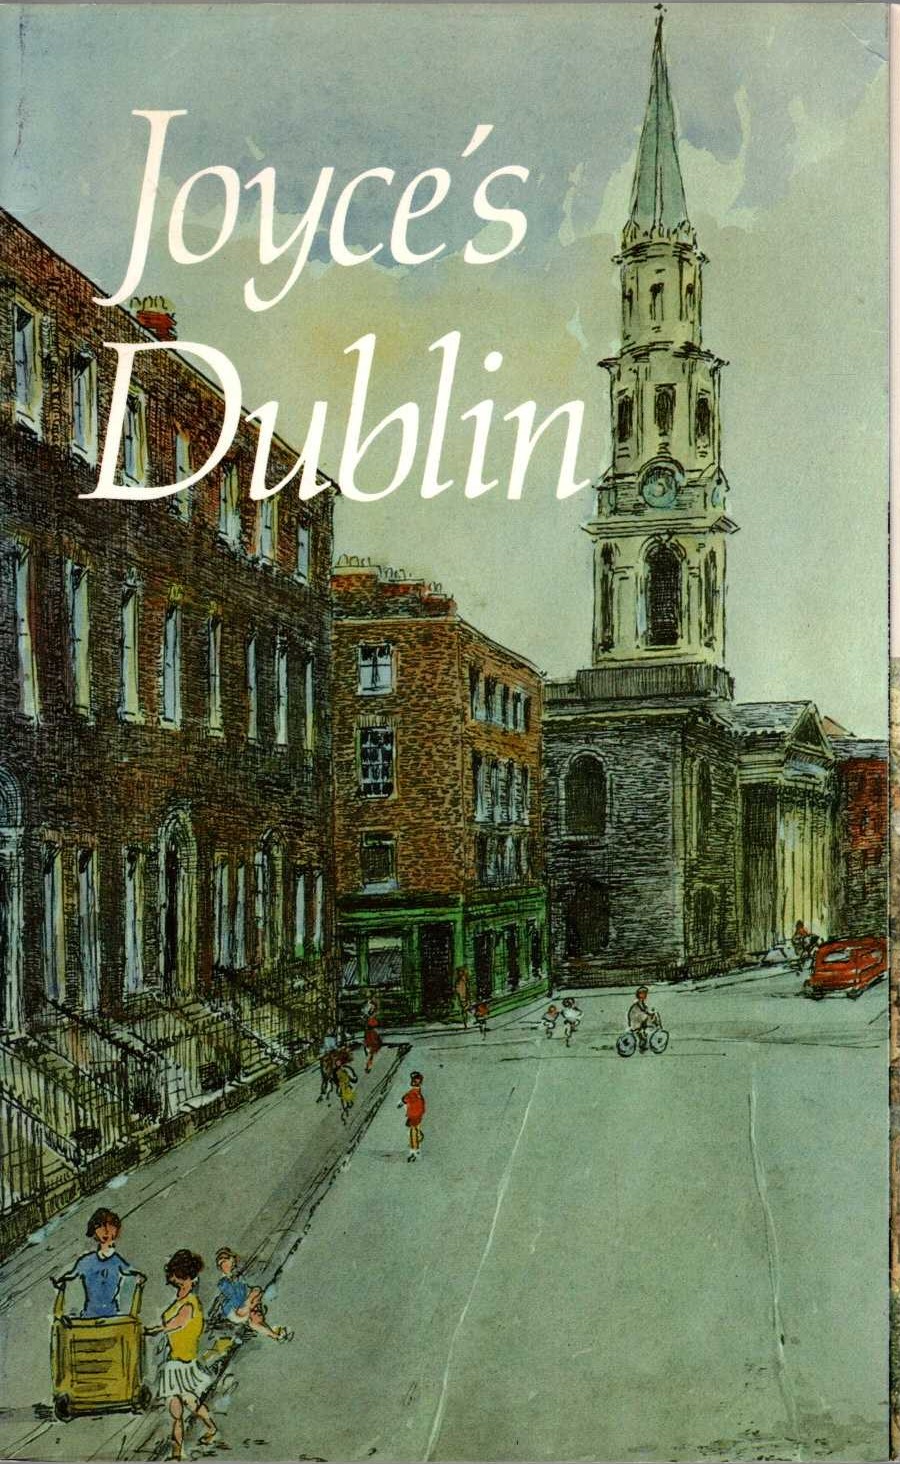 (David Norris) JOYCE'S DUBLIN front book cover image